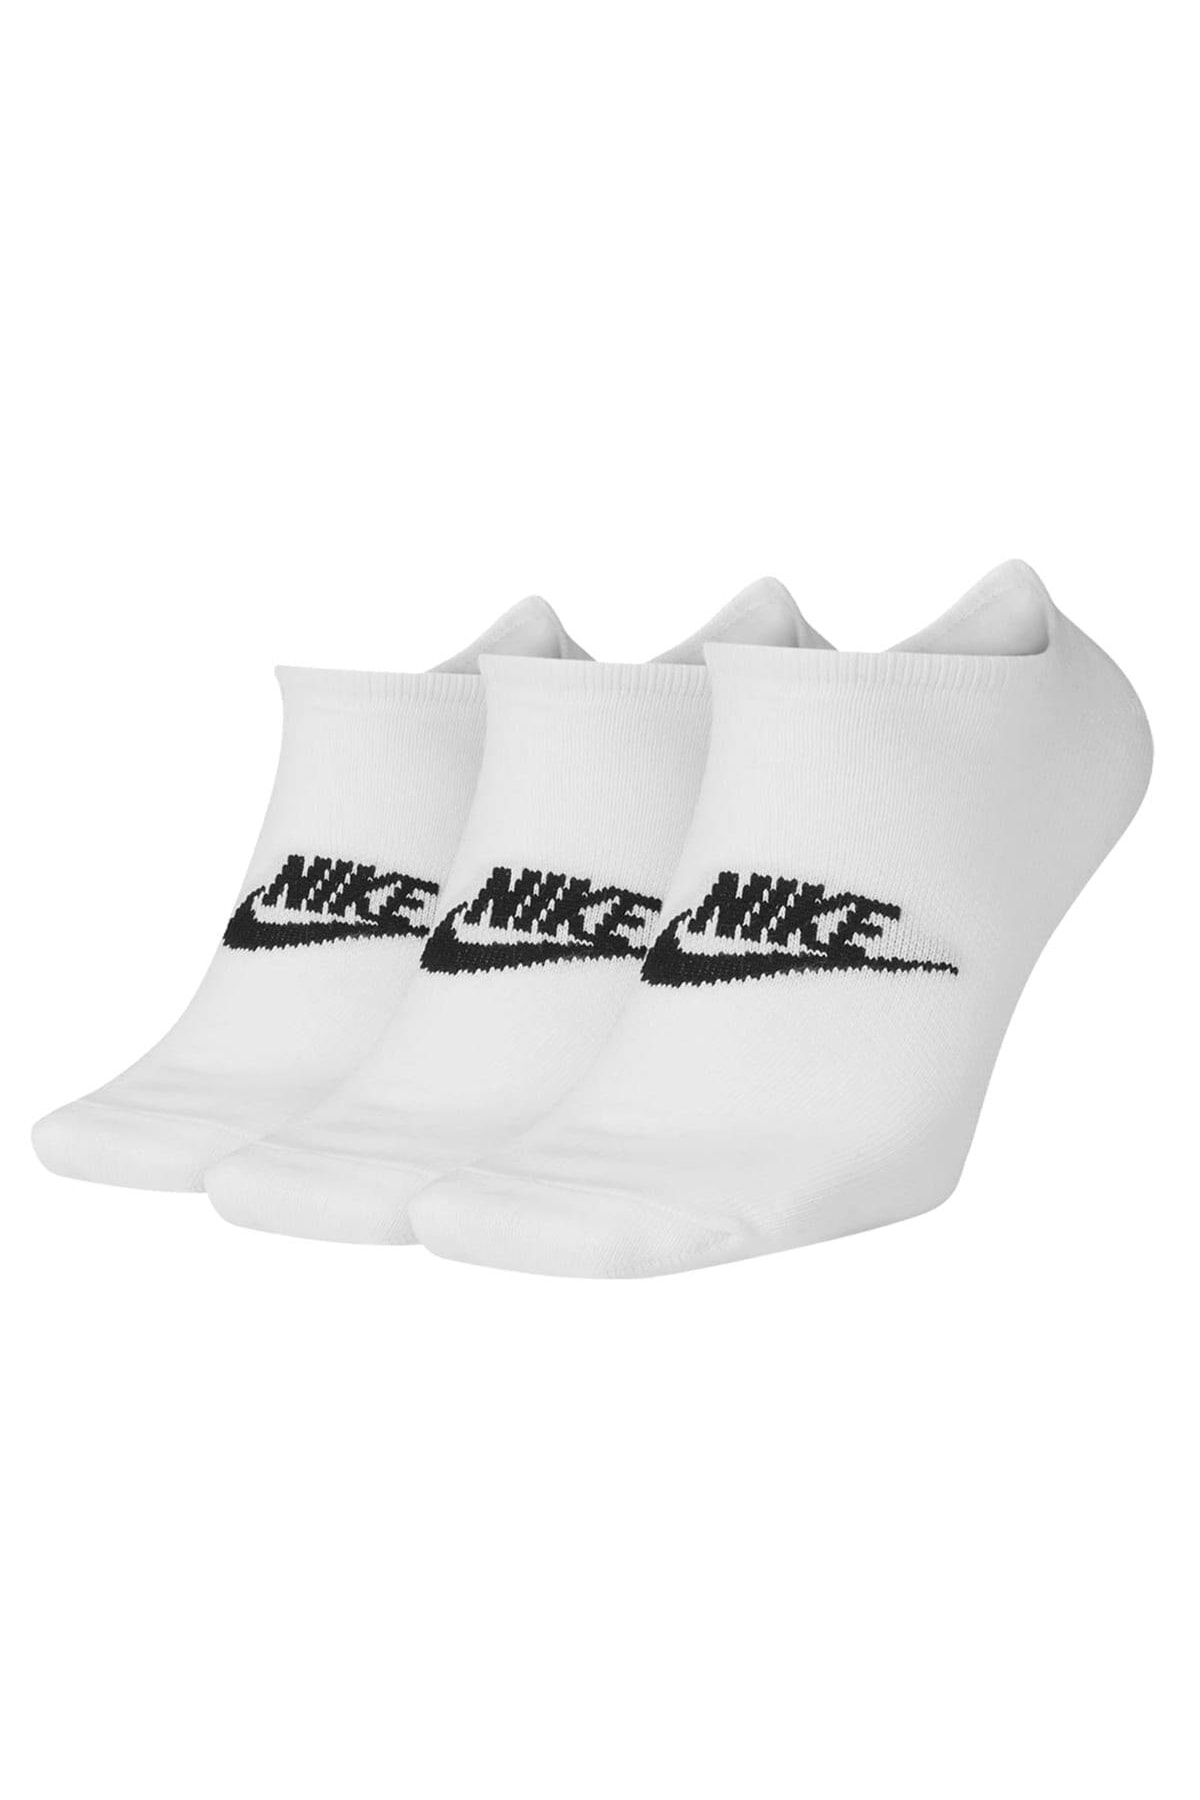 Nike Socken Weiß 3er-Pack